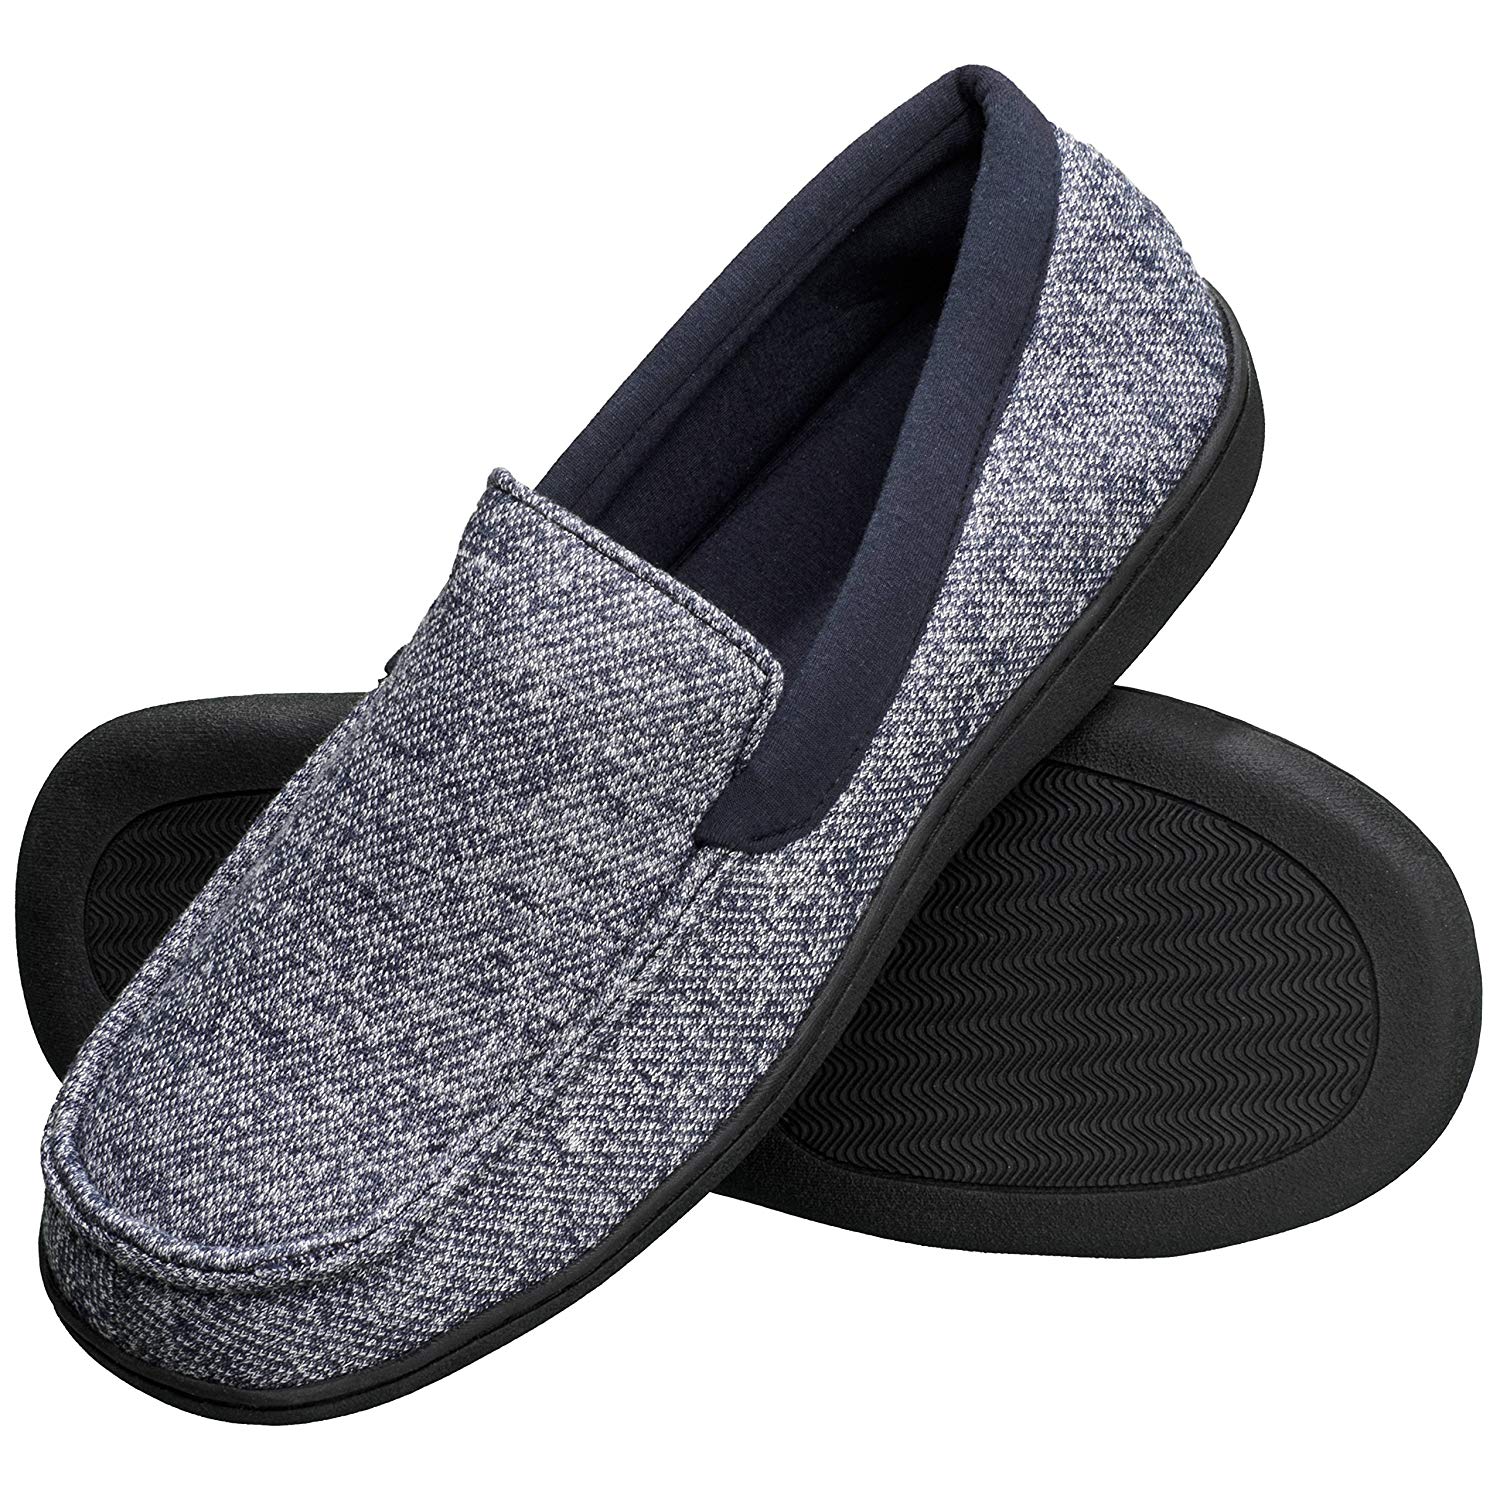 Hanes Men's Slippers House Shoes Moccasin Comfort Memory Foam, Navy ...